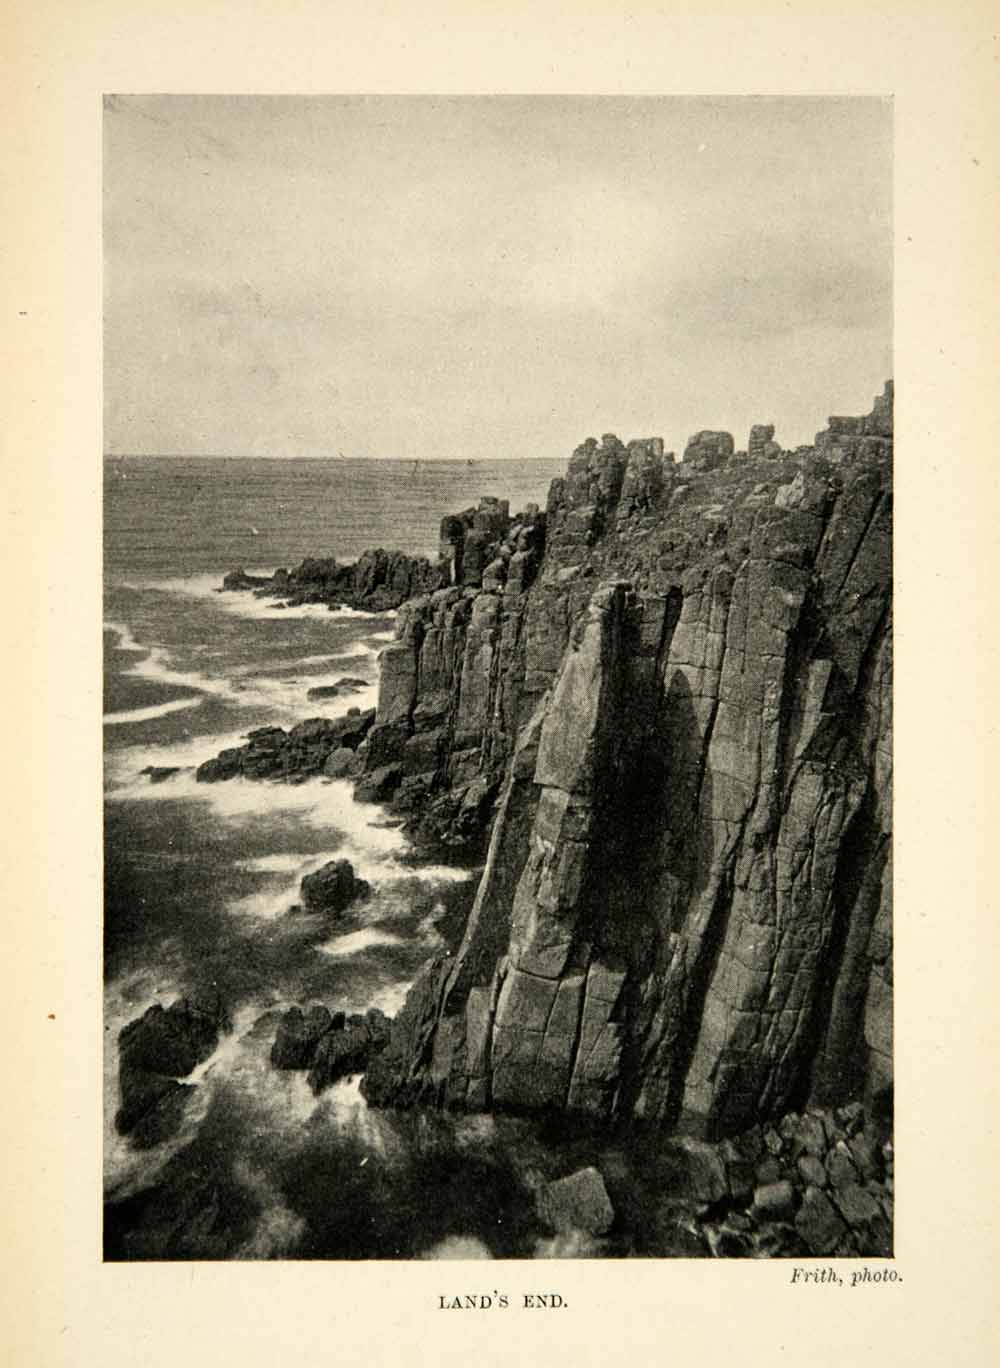 1902 Print Headland Lands End Cornwall England Penwith Peninsula Landscape XGUC8